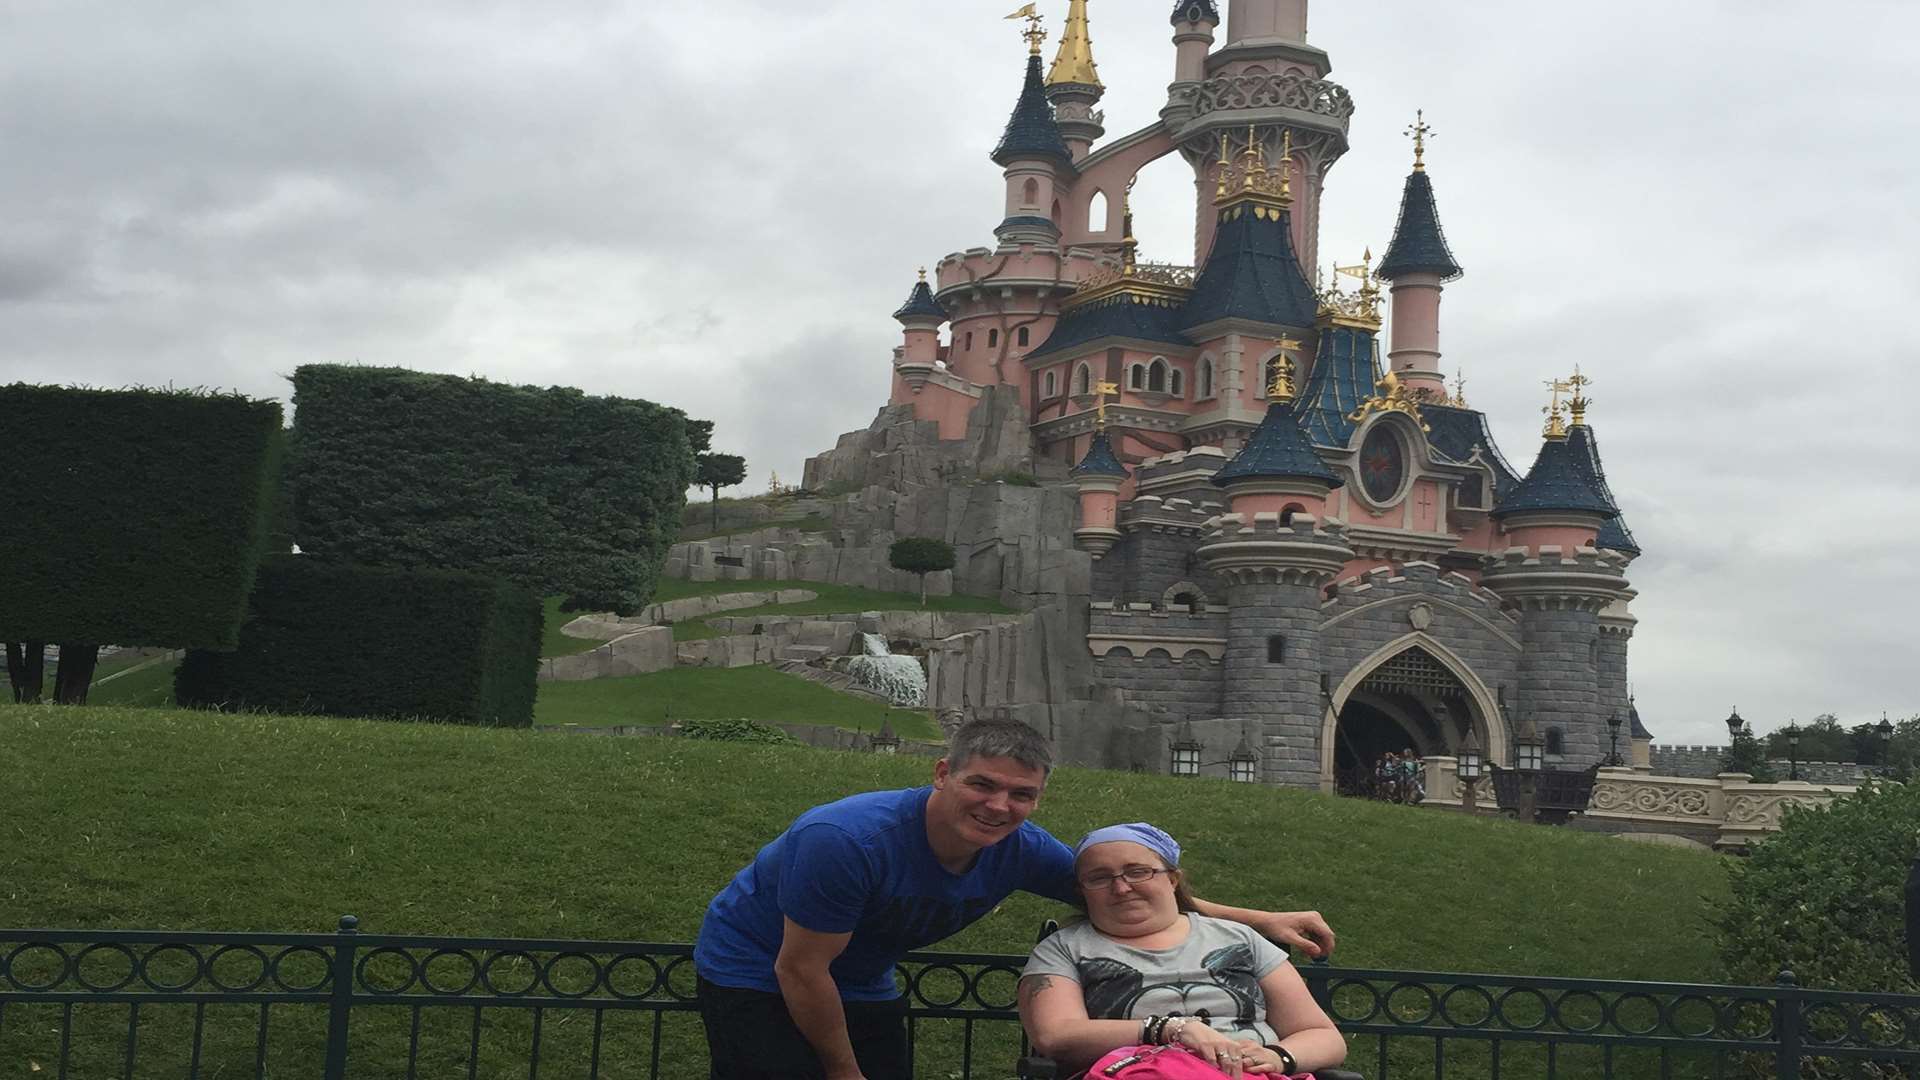 Melissa and Matt Chance enjoy precious moments at Disneyland Paris